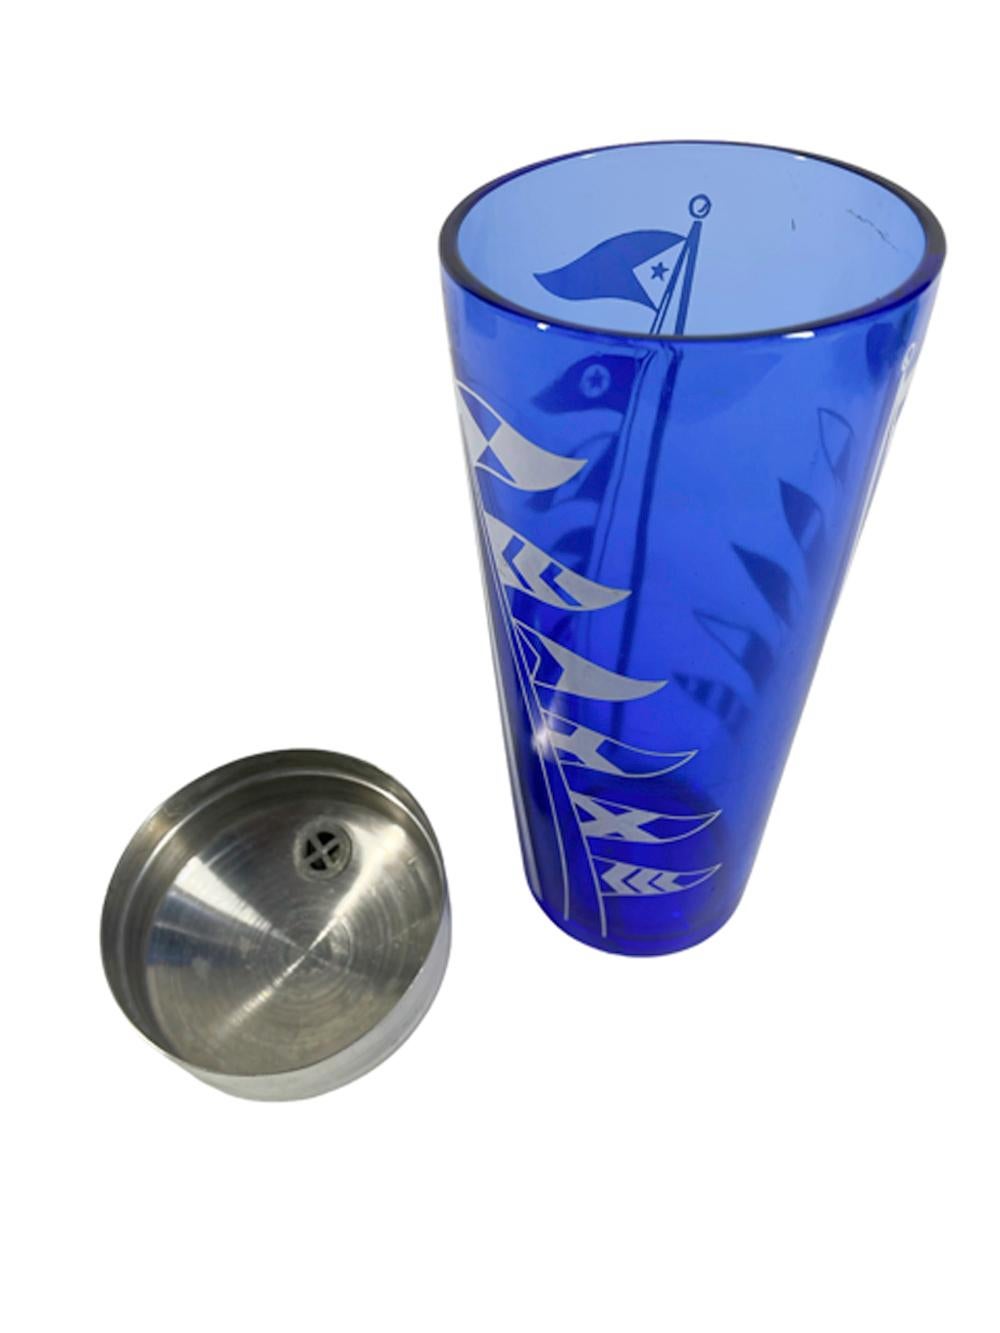 American Vintage Hazel-Atlas Nautical Theme Cobalt Blue Glass Cocktail Shaker For Sale